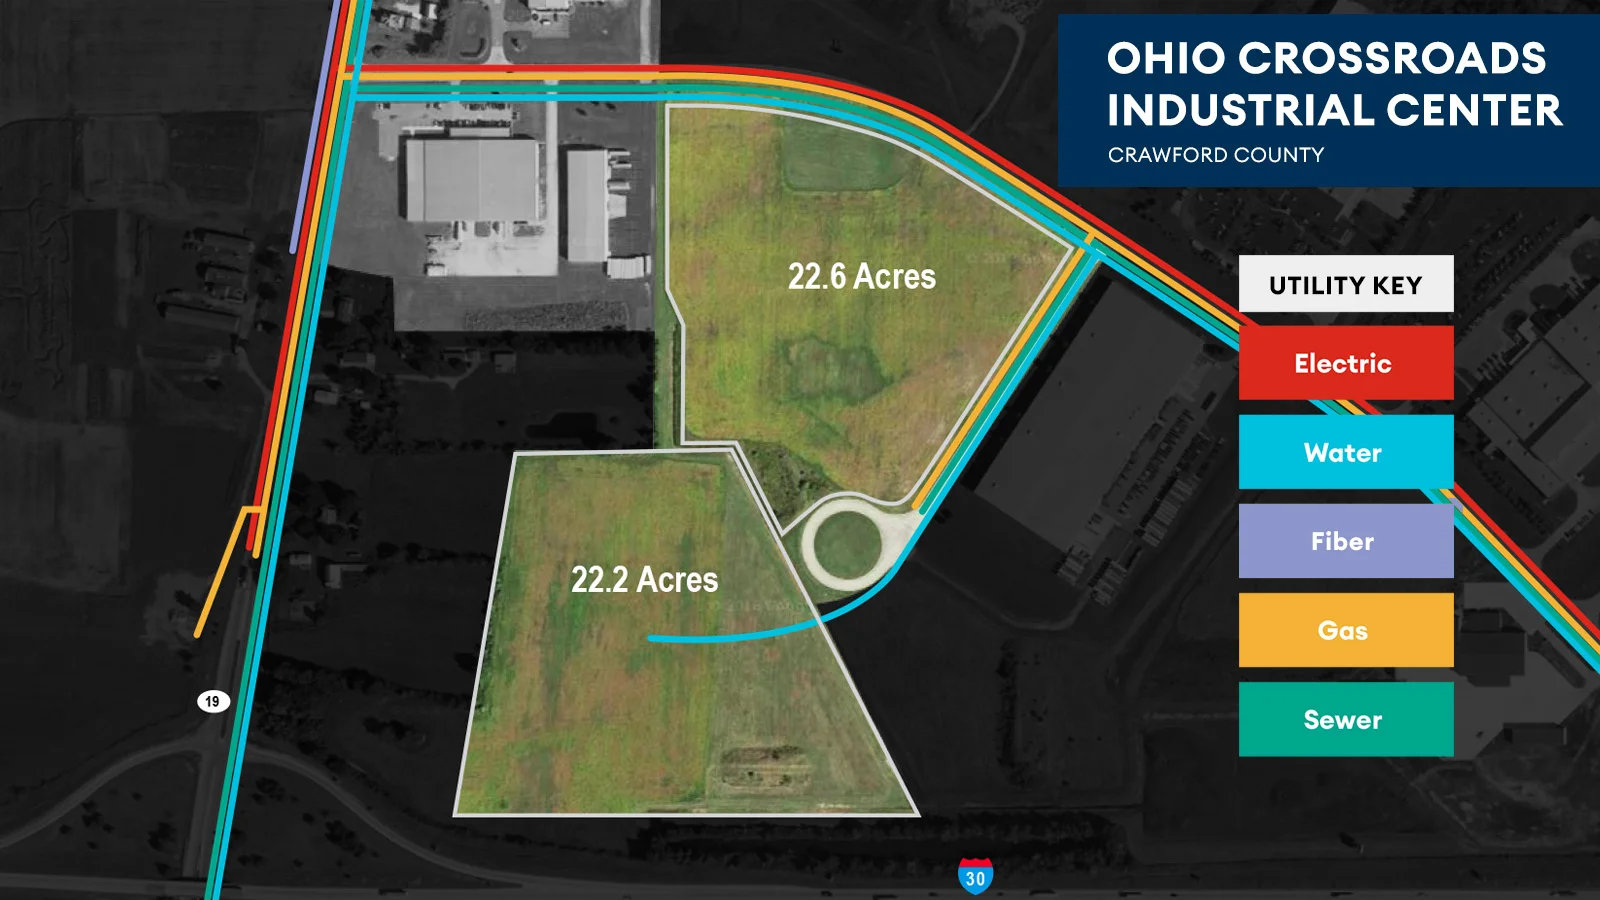 Ohio Crossroads Industrial Center Utility Map